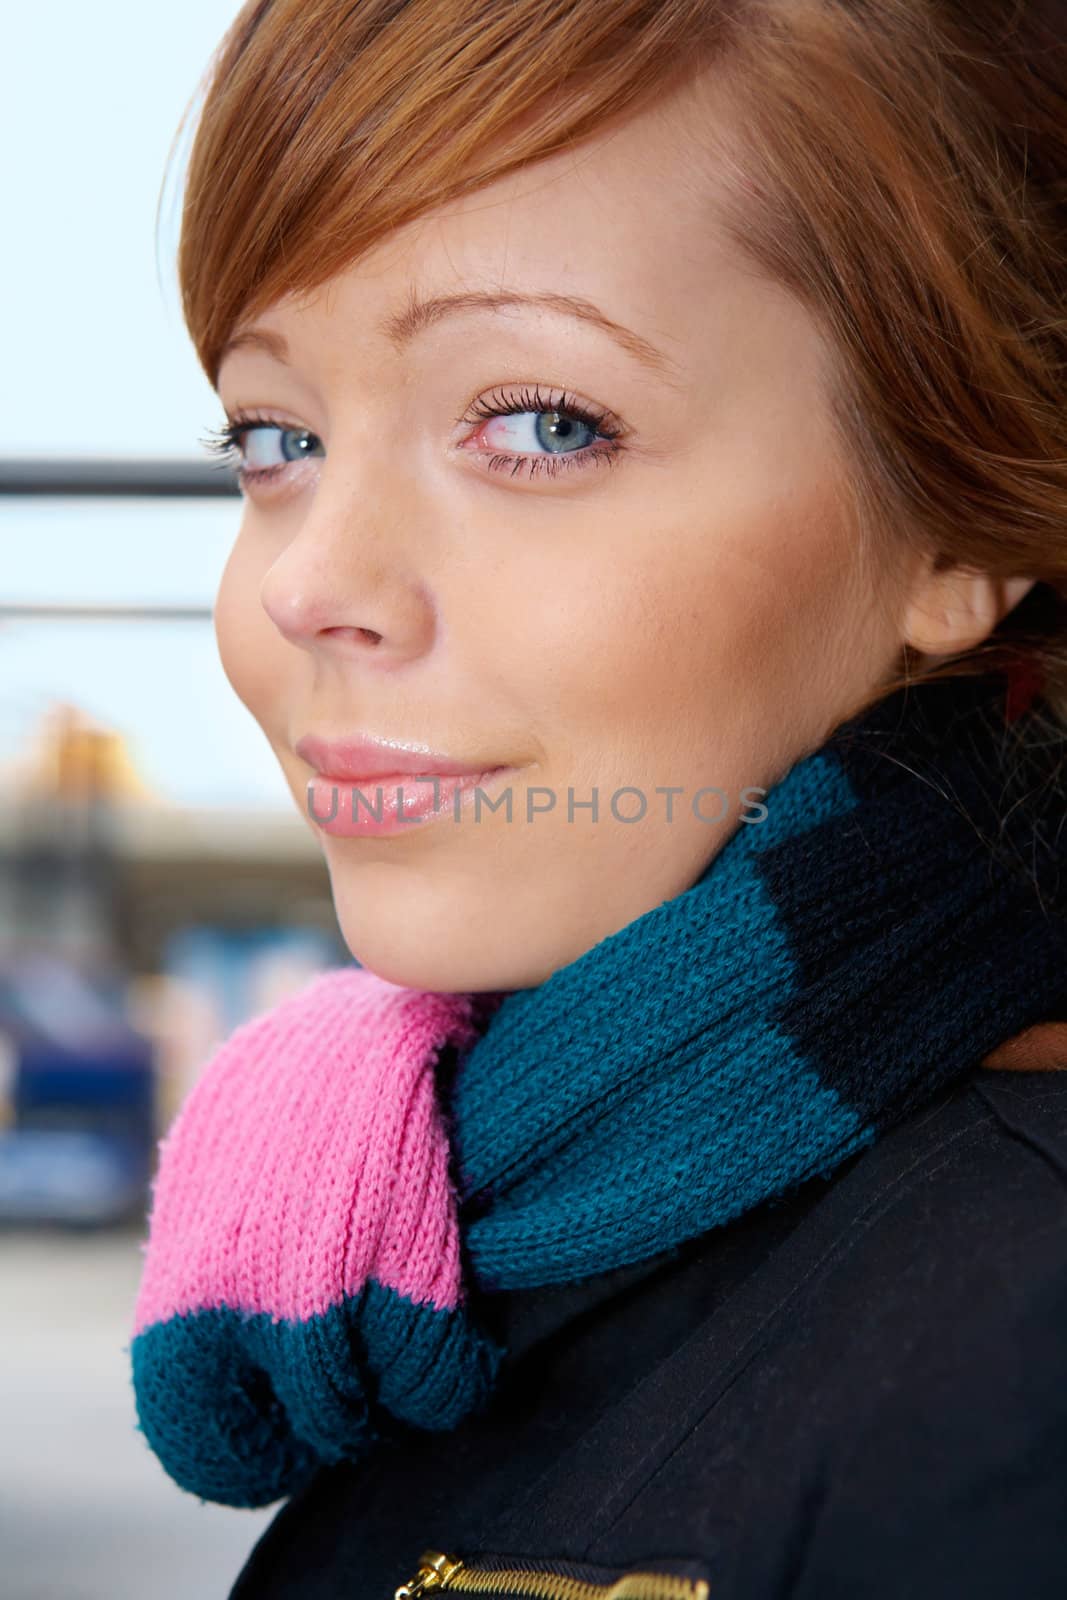 Teenage girl wearing scarf, smiling, looking at camera